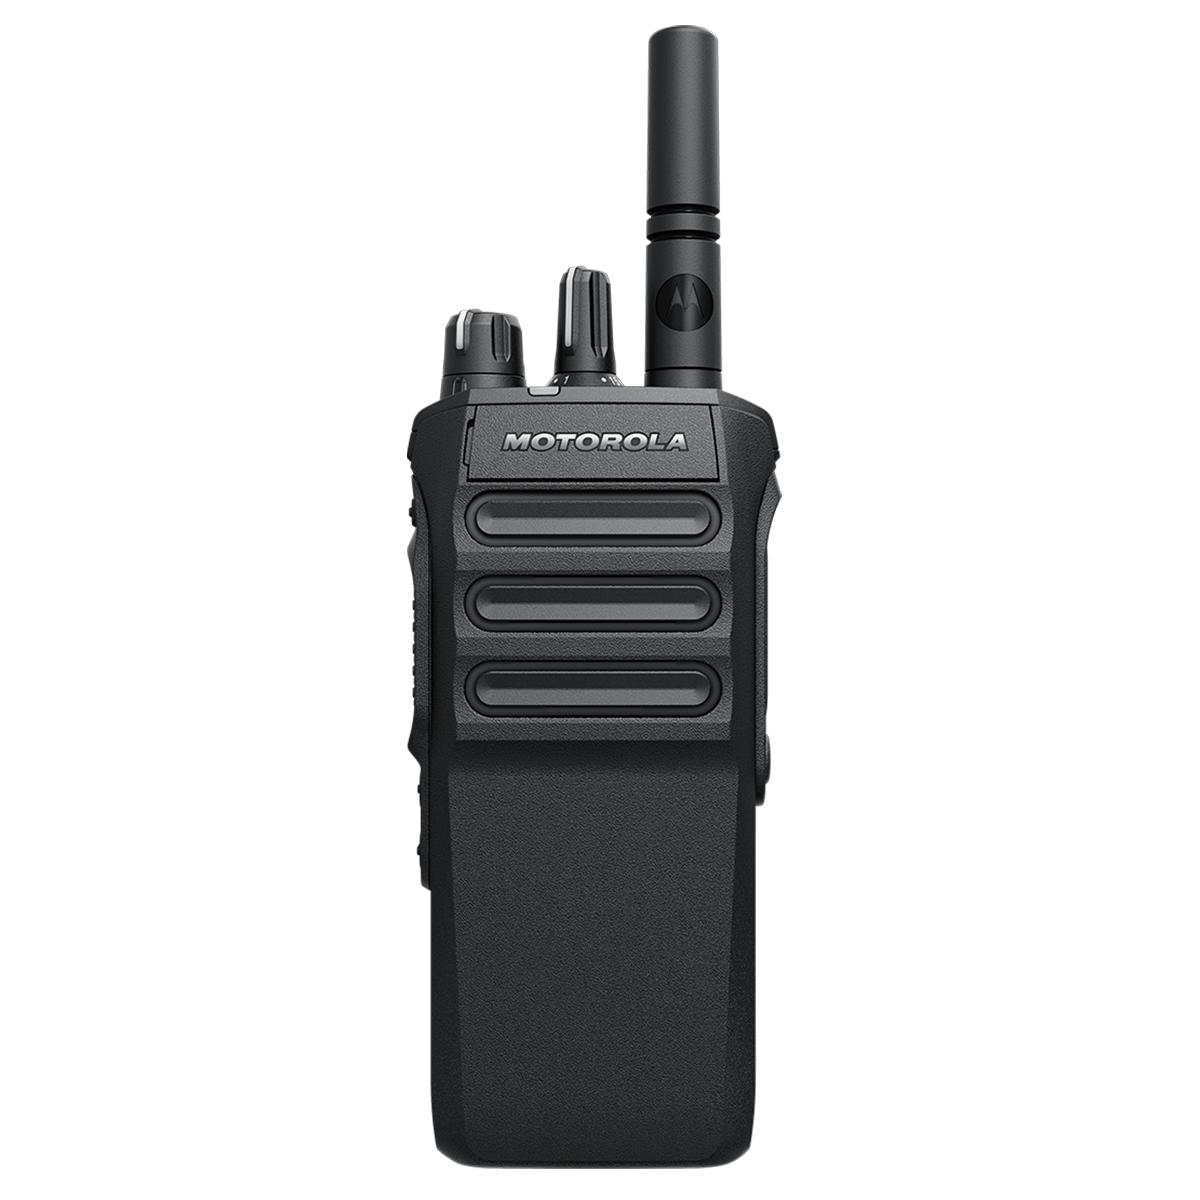 Radio Motorola digital R7 1000 Ch 5W VHF 136-174MHZ Capable NKP